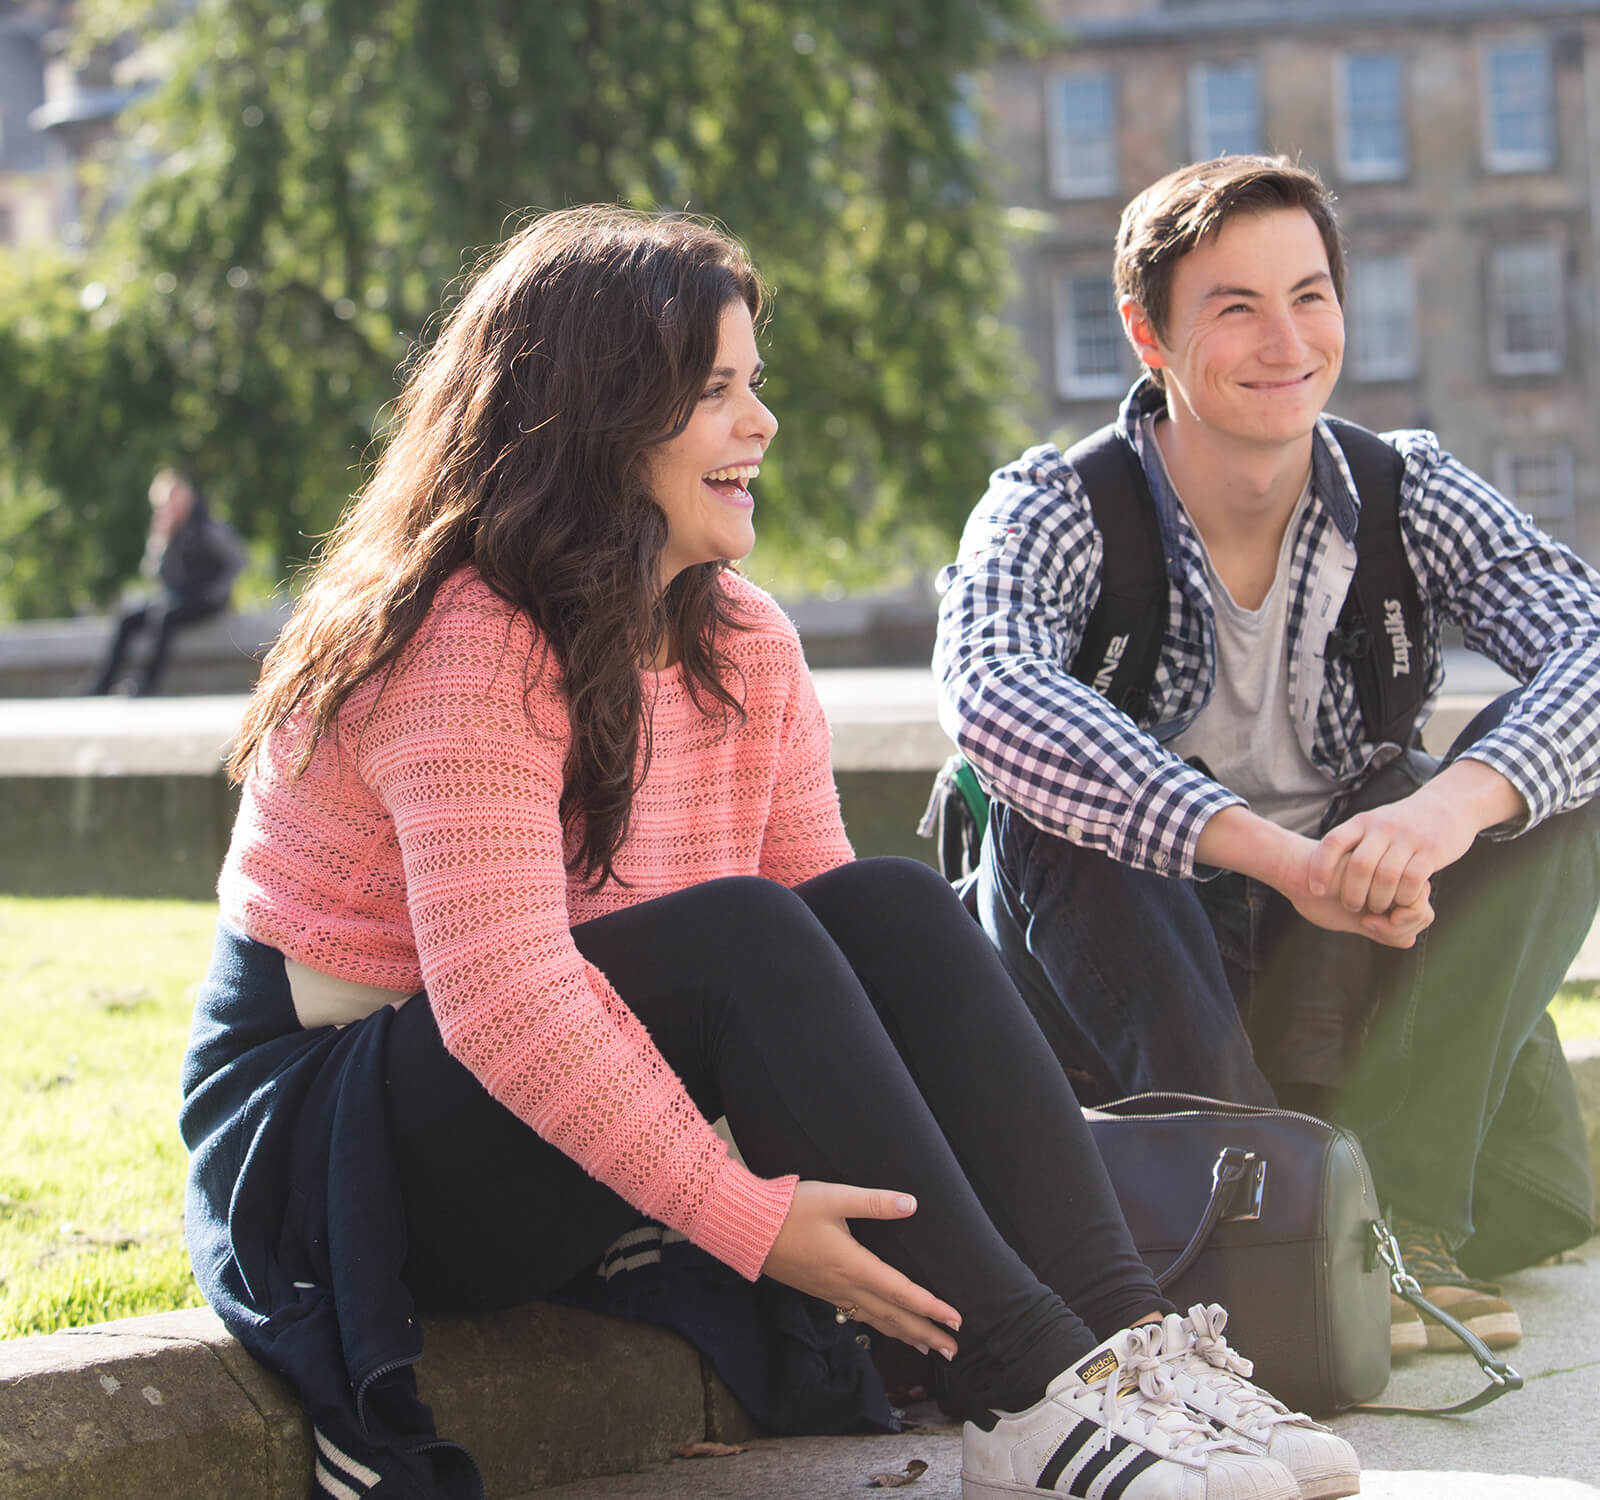 UWS Student enjoying University Life with Friends | University of the West of Scotland